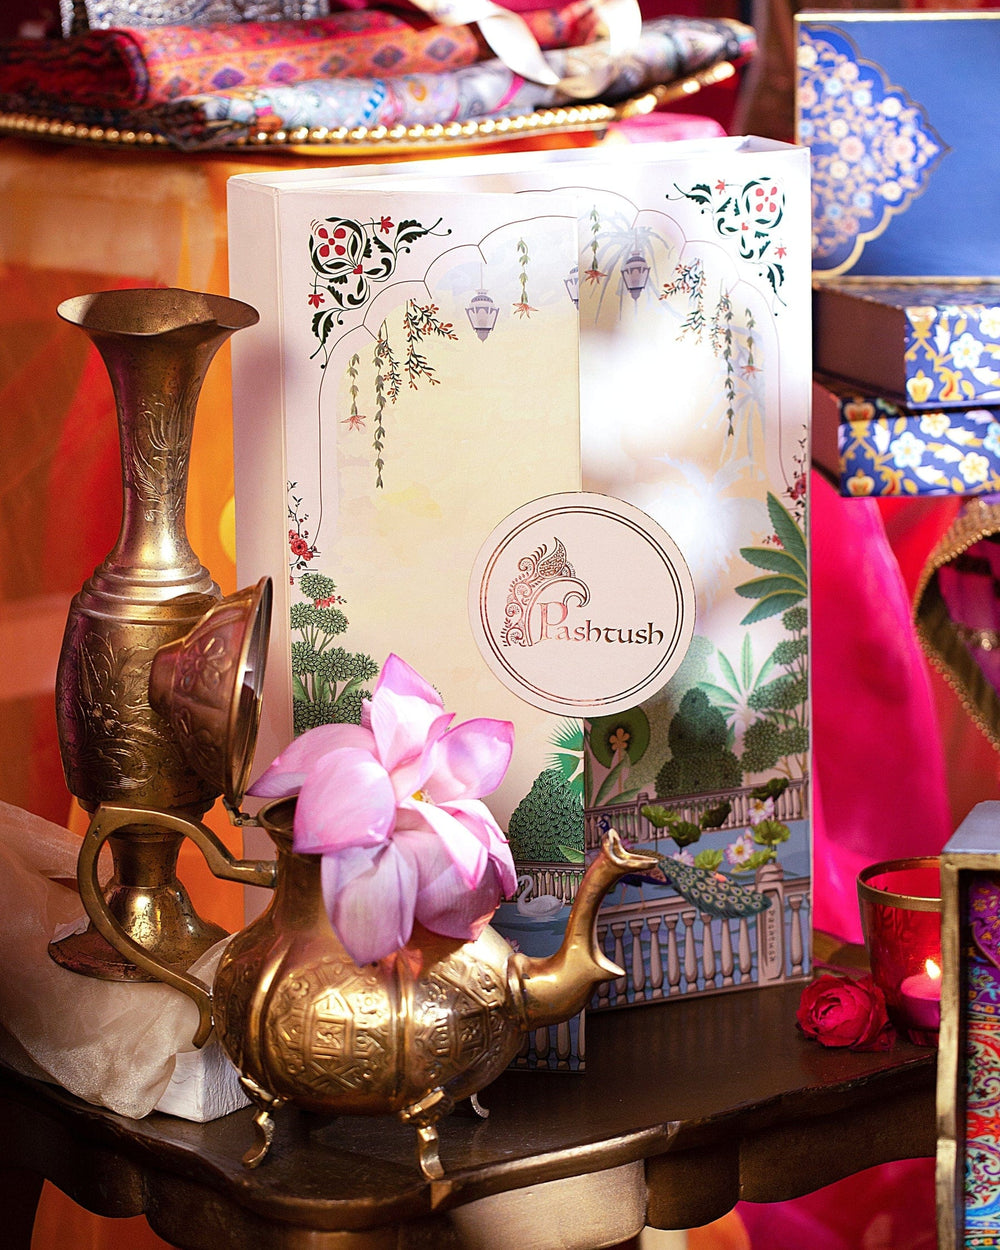 Pashtush India Gift Pack Pashtush His And Her Set Of Check Shawl and Ethnic Palla Shawl With Premium Gift Box Packaging, Black and Orange